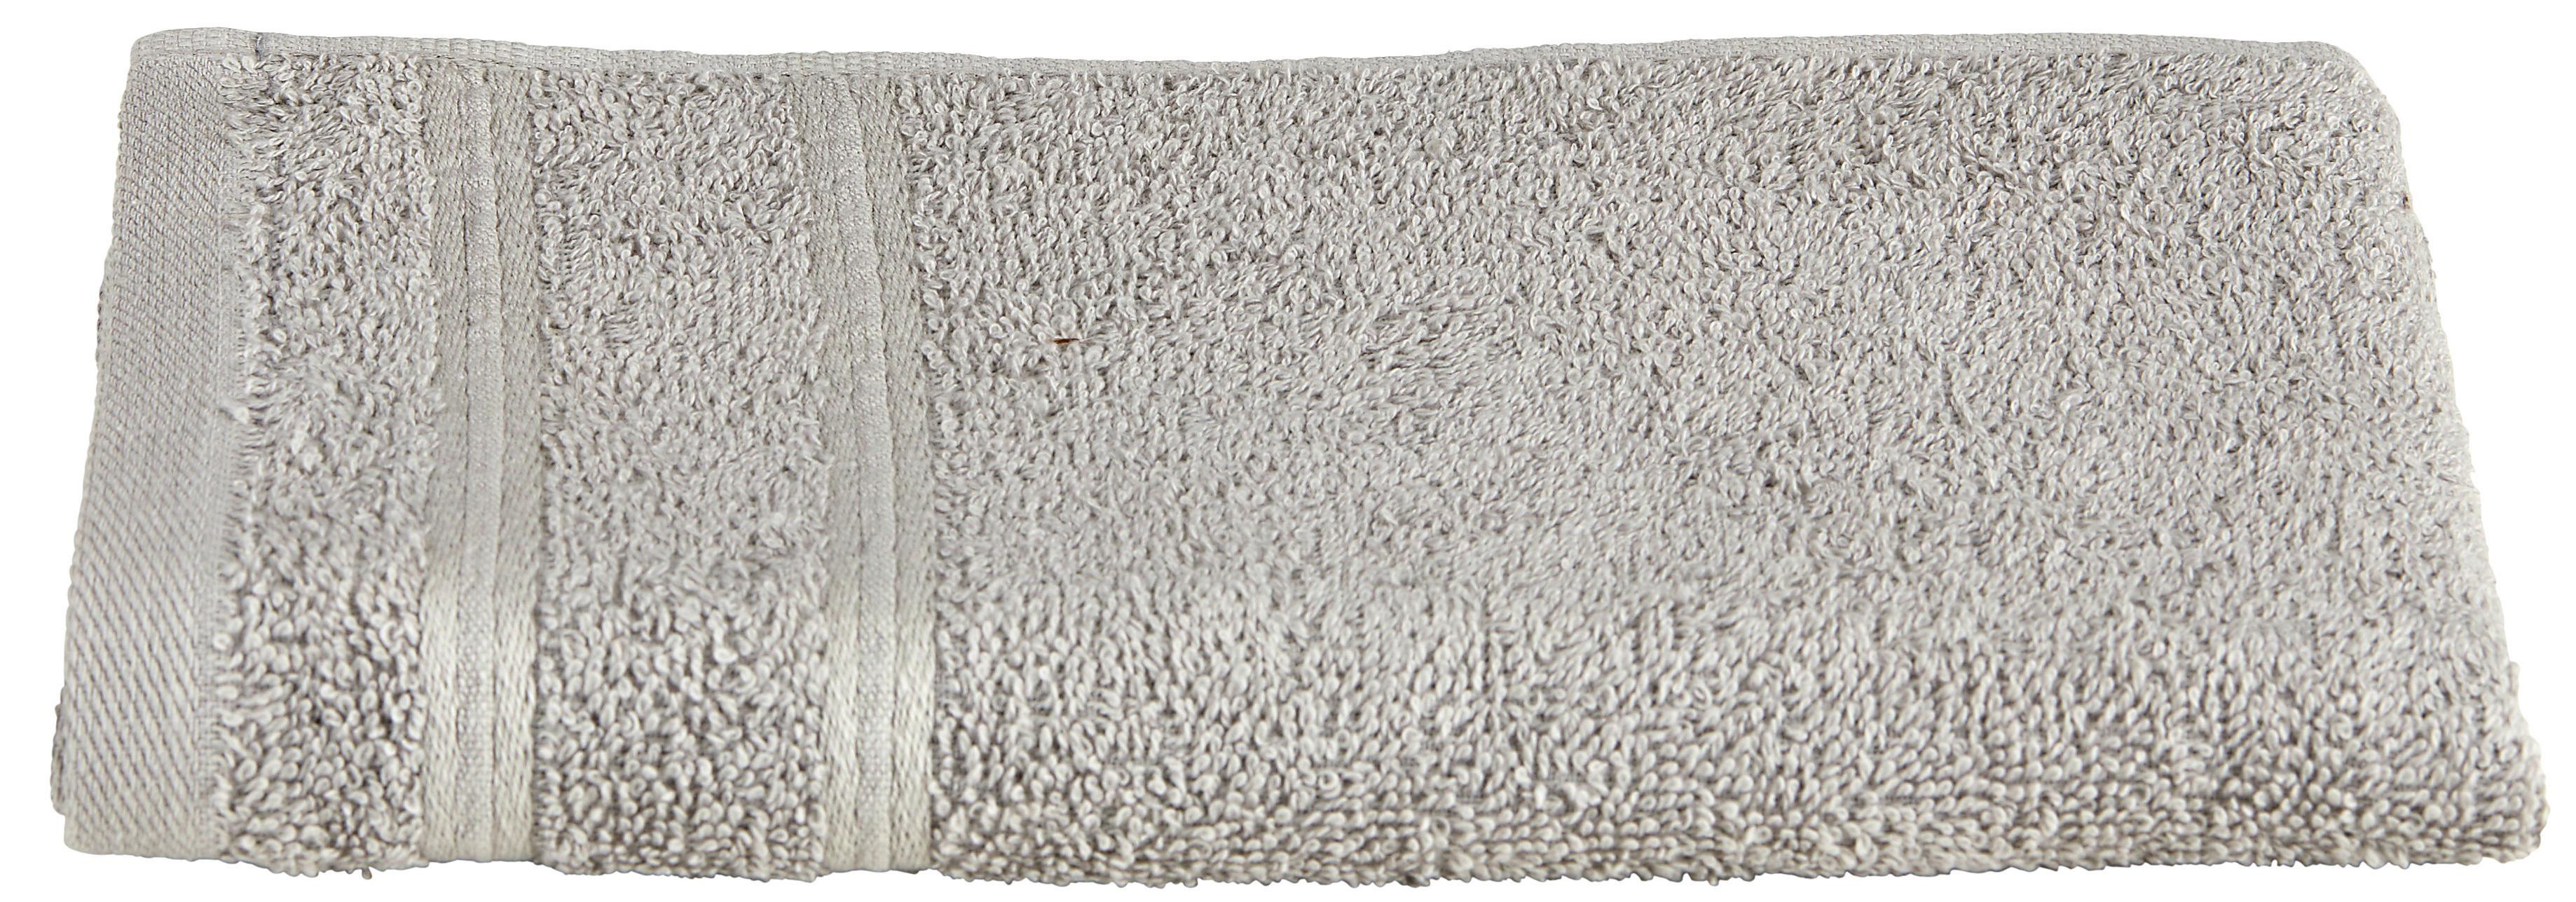 Brisača Melanie - svetlo siva, tekstil (30/50cm) - Modern Living